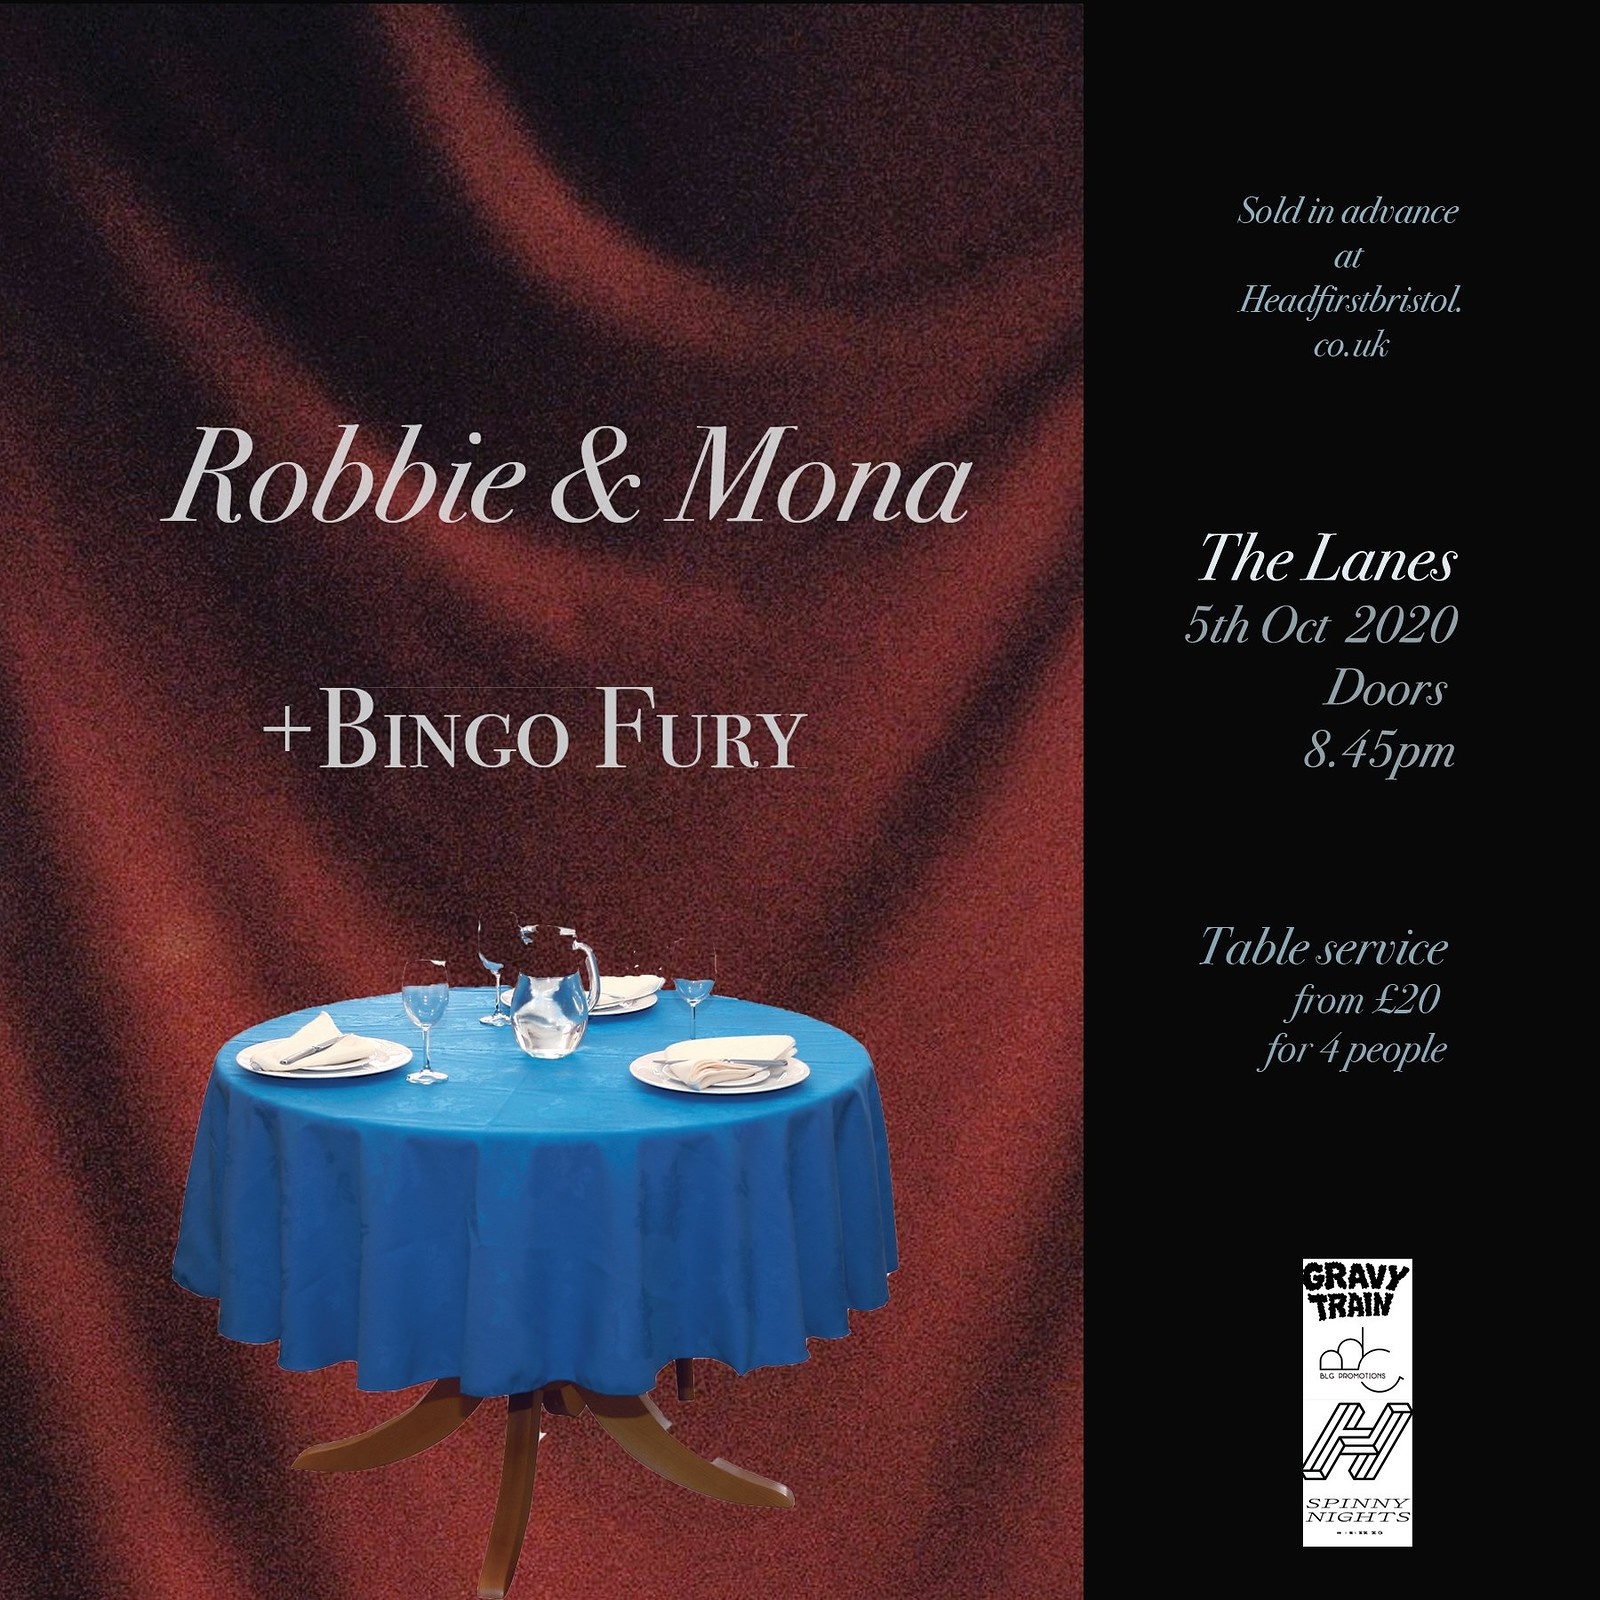 ROBBIE & MONA + BINGO FURY at The Lanes